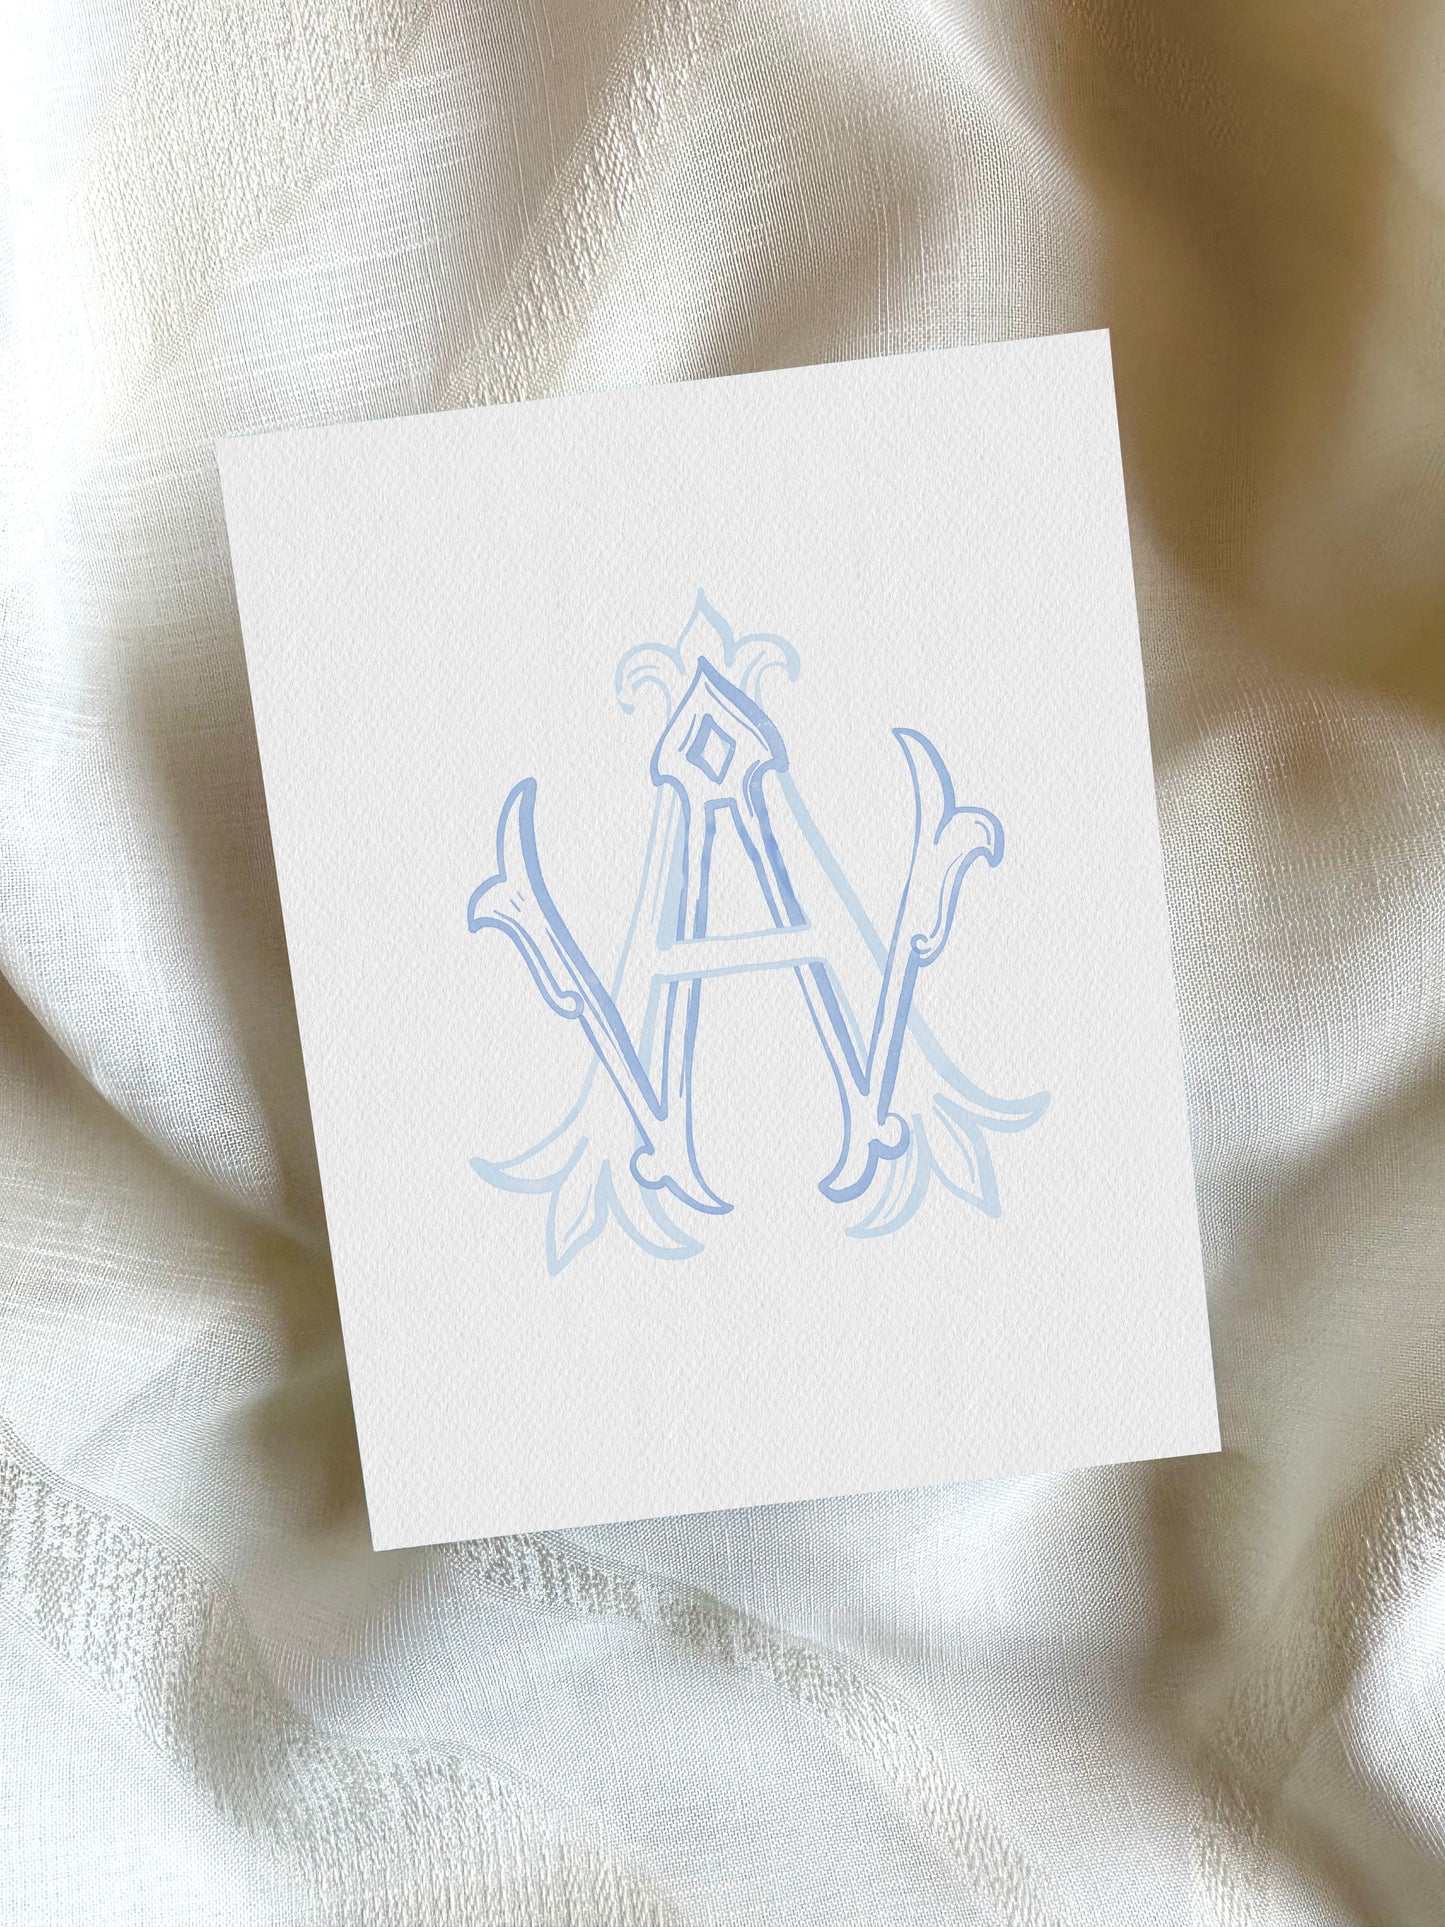 2 Letter Monogram with Letters AW WA | Digital Download - Wedding Monogram SVG, Personal Logo, Wedding Logo for Wedding Invitations